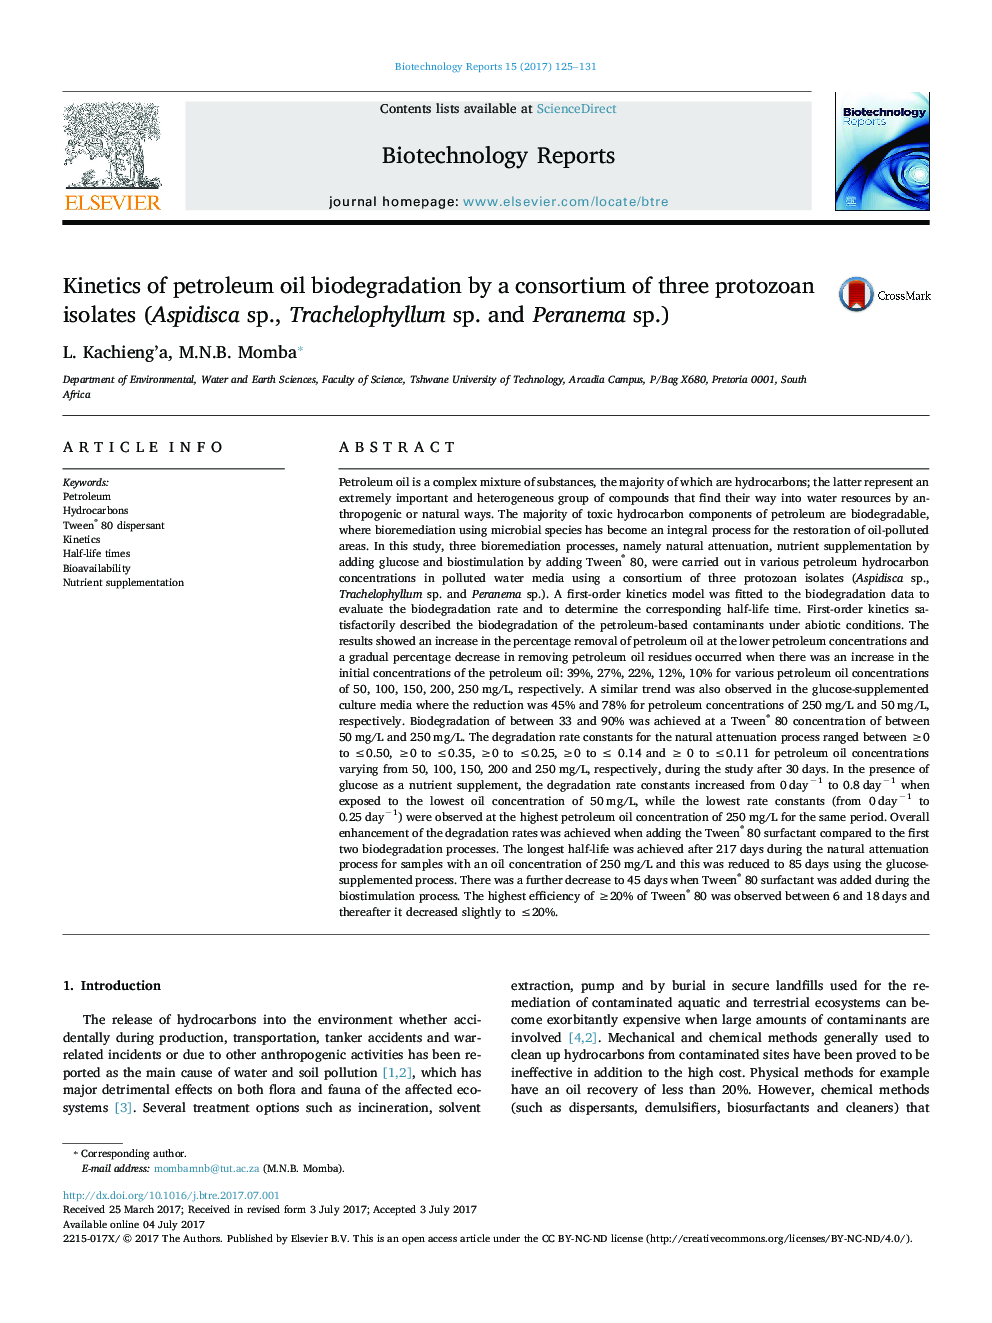 Kinetics of petroleum oil biodegradation by a consortium of three protozoan isolates (Aspidisca sp., Trachelophyllum sp. and Peranema sp.)